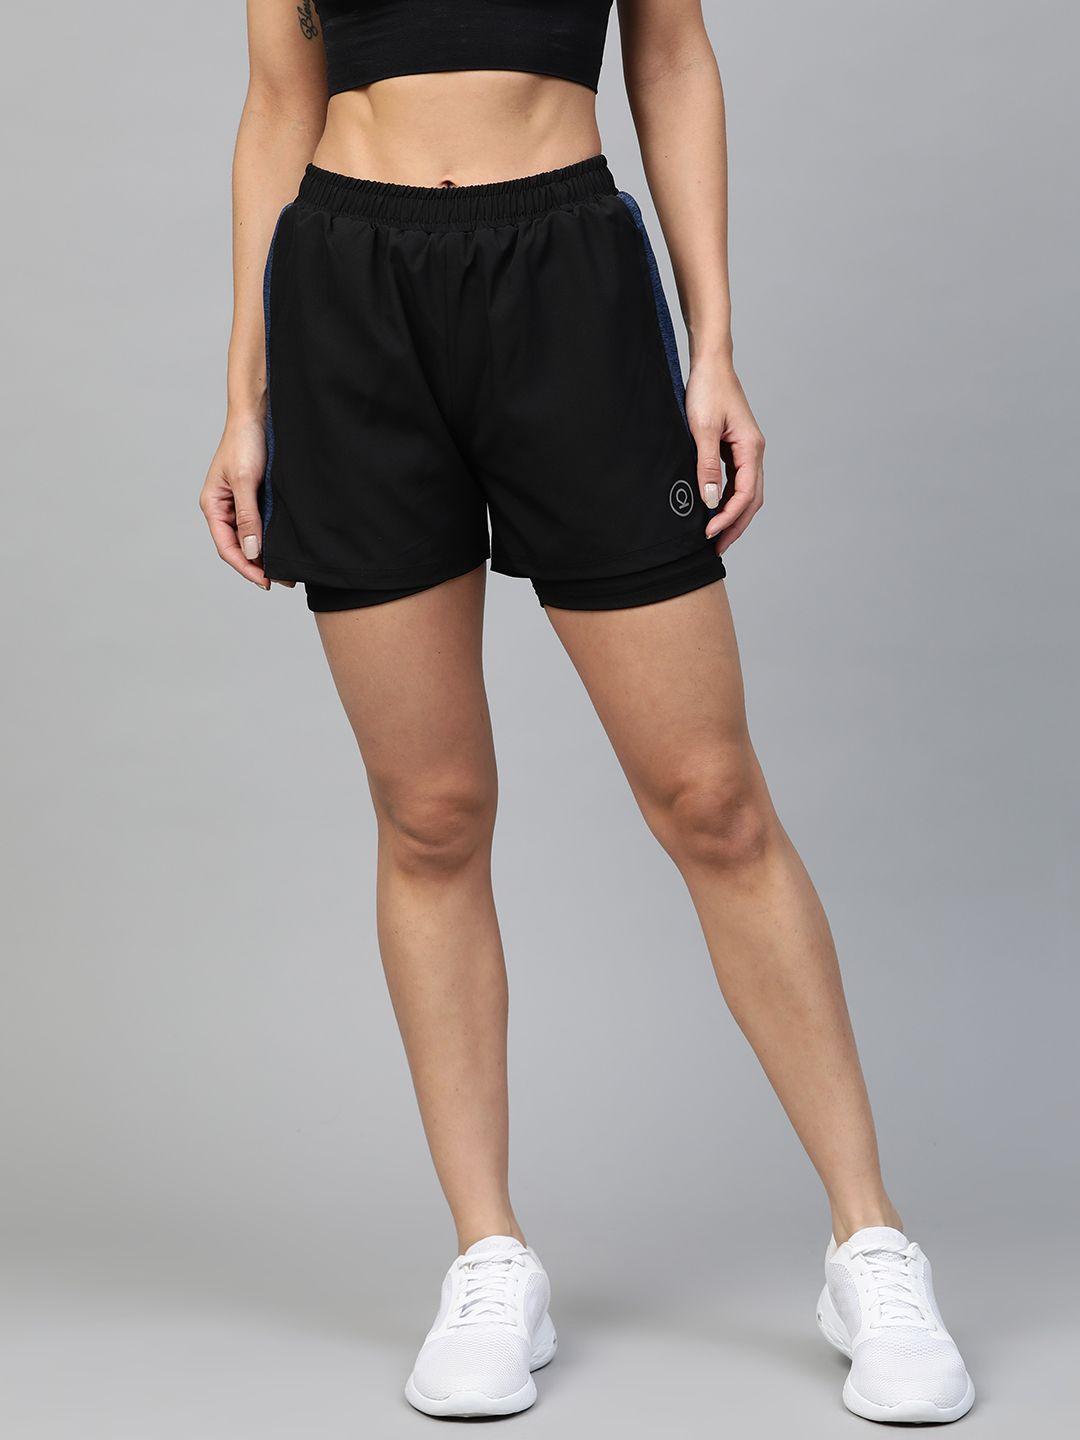 chkokko women black side panelled regular fit double layered running shorts